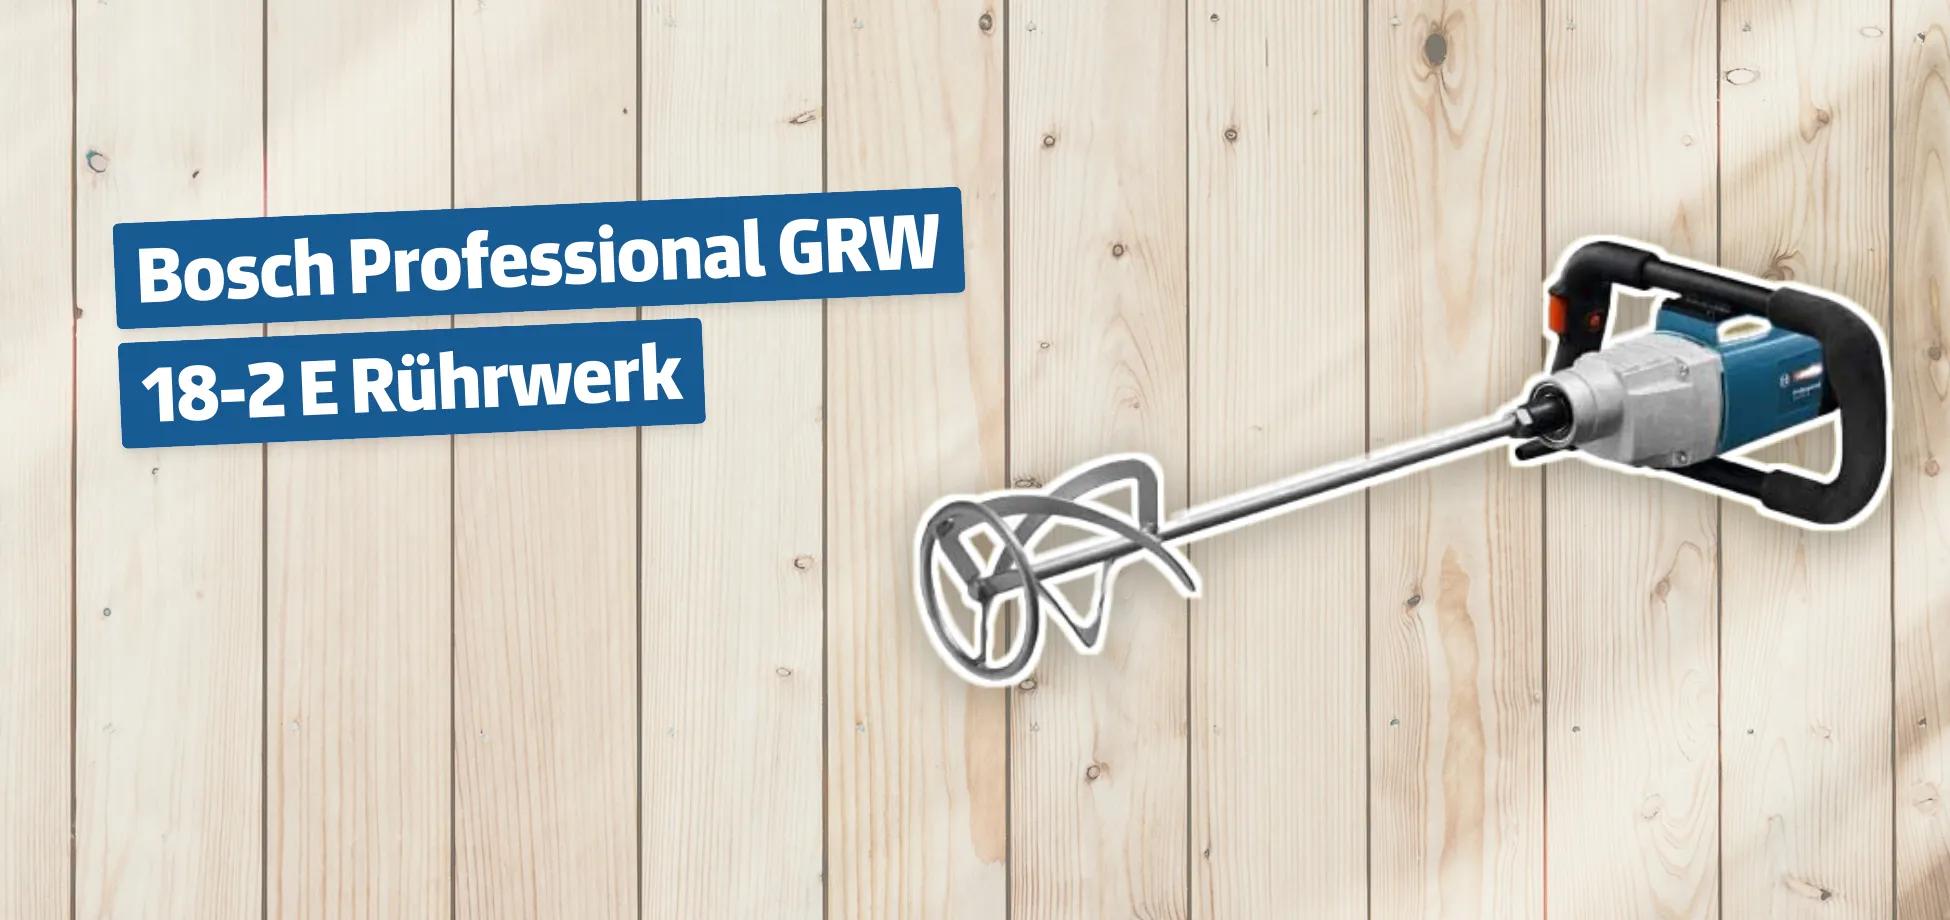 Bosch Professional GRW 18-2 E Rührwerk